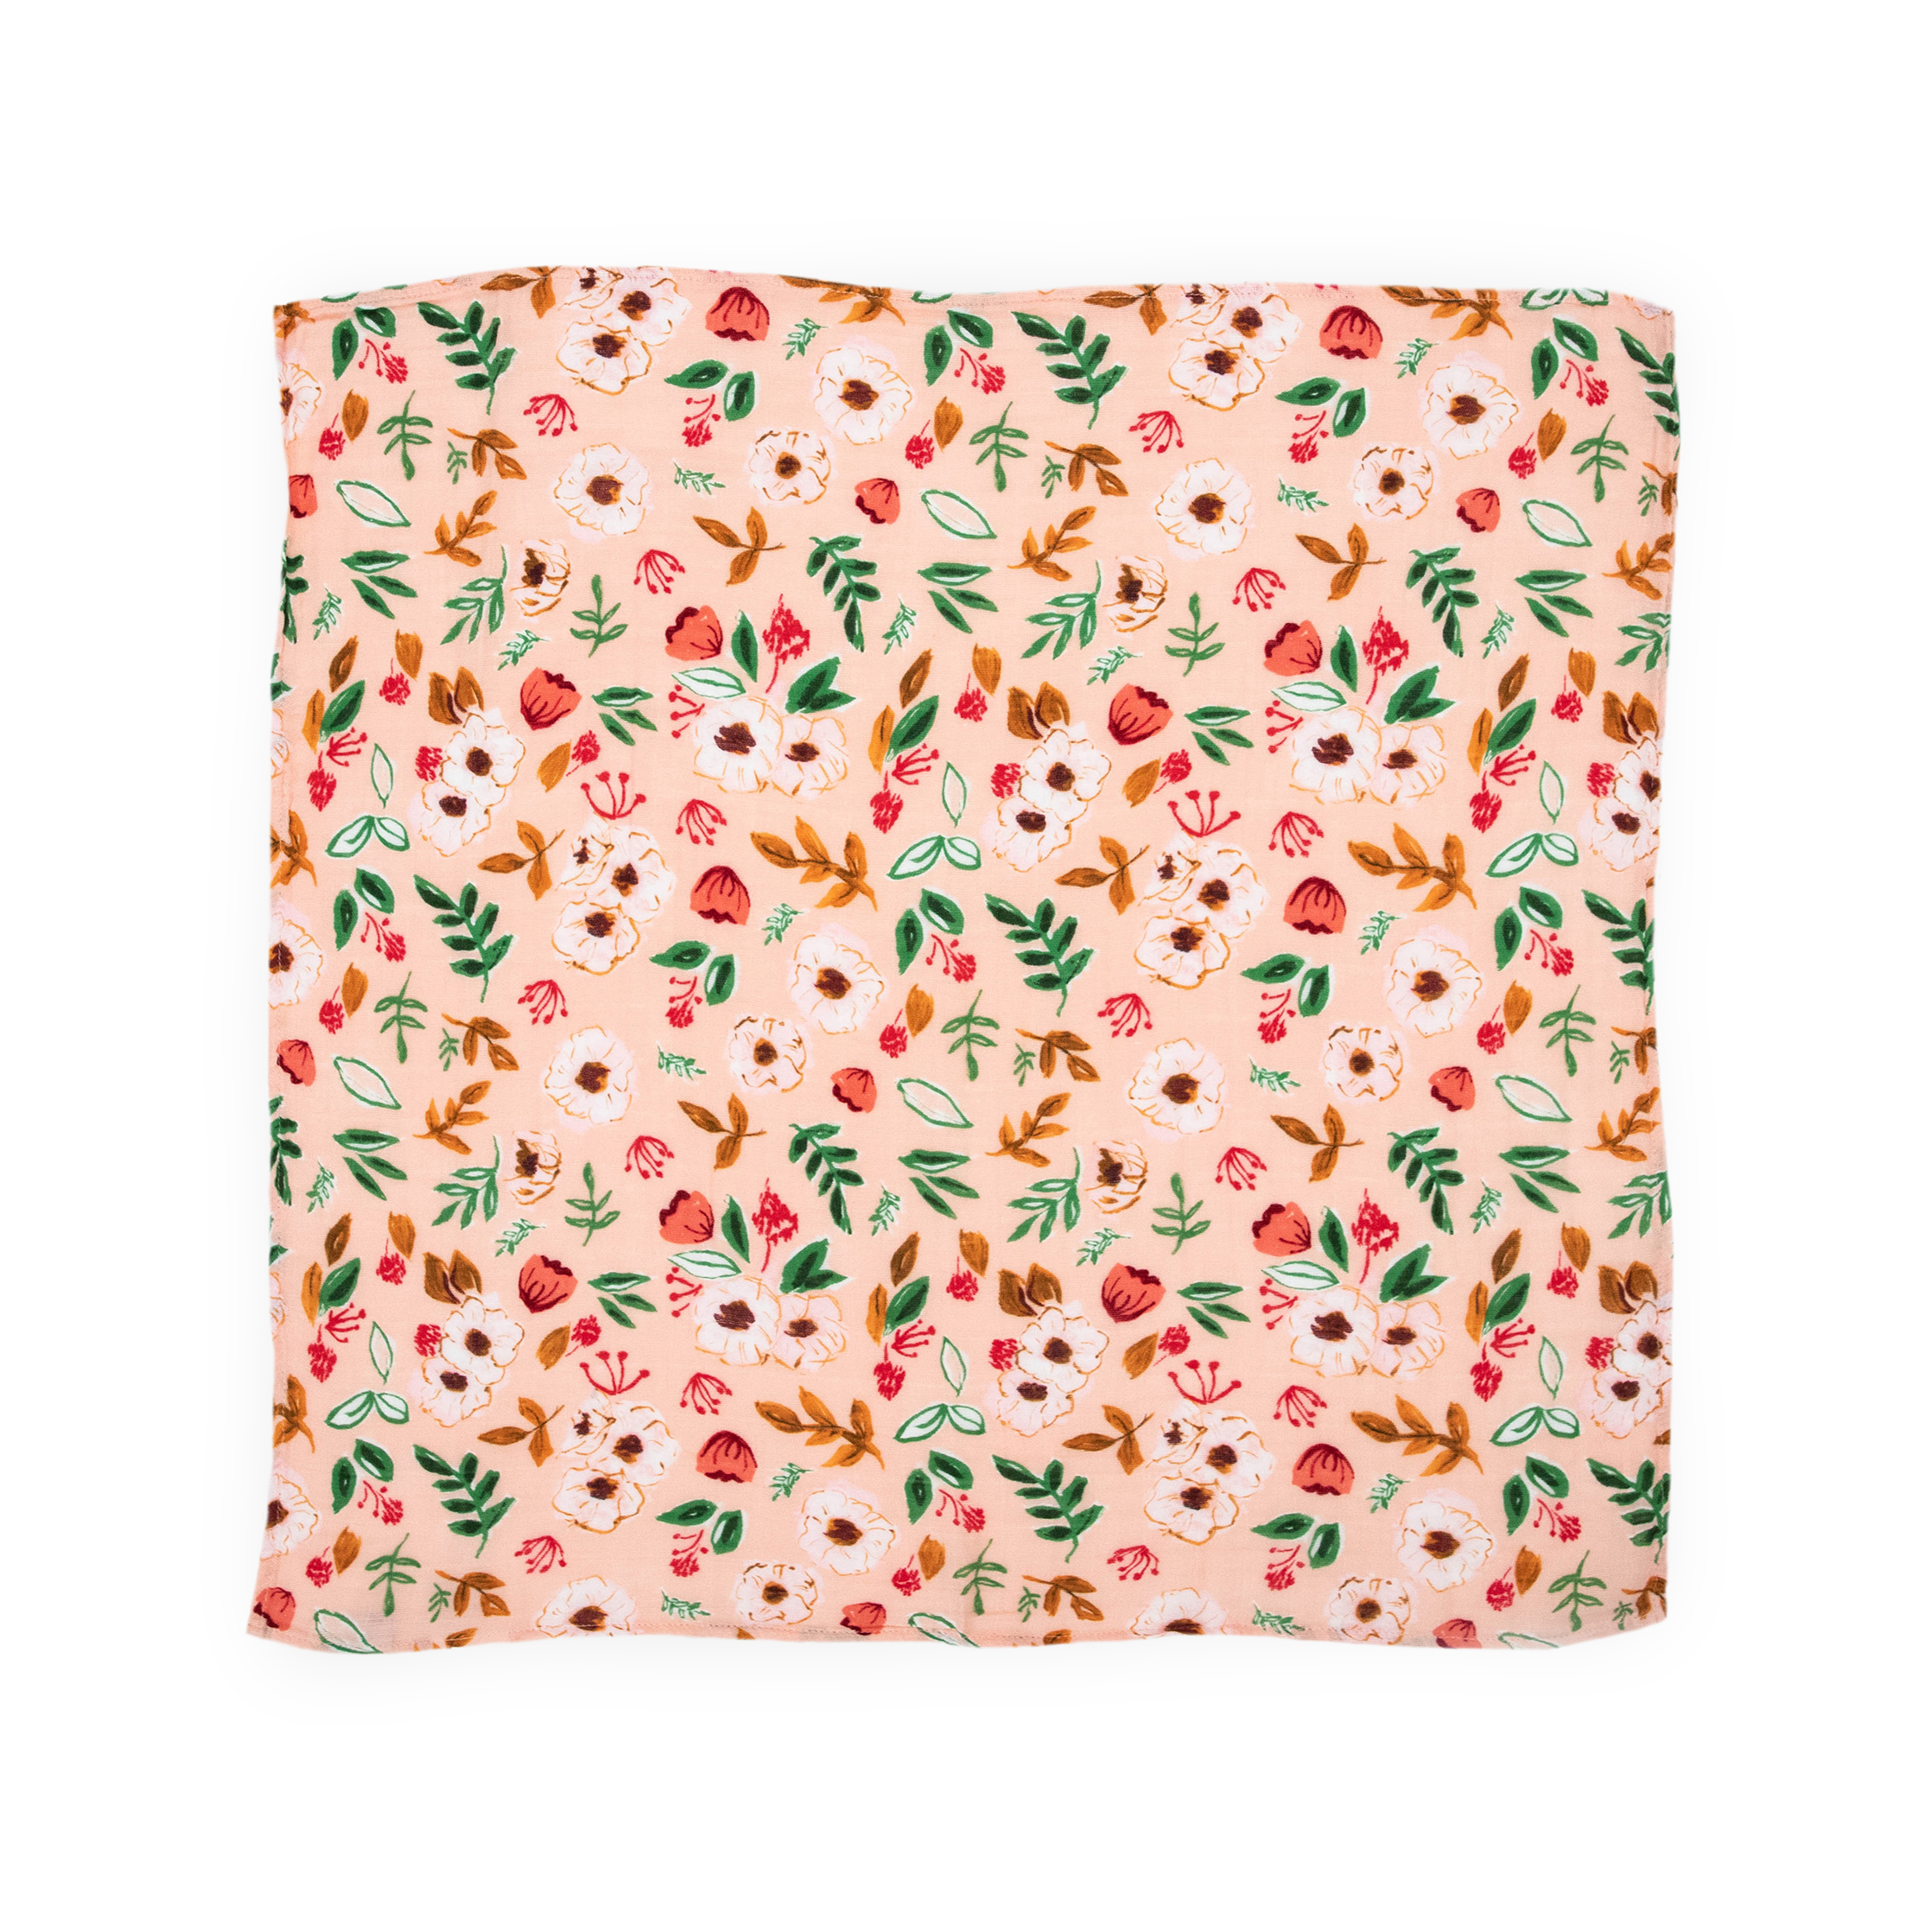 Cotton Muslin Squares 4 Pack - Vintage Floral